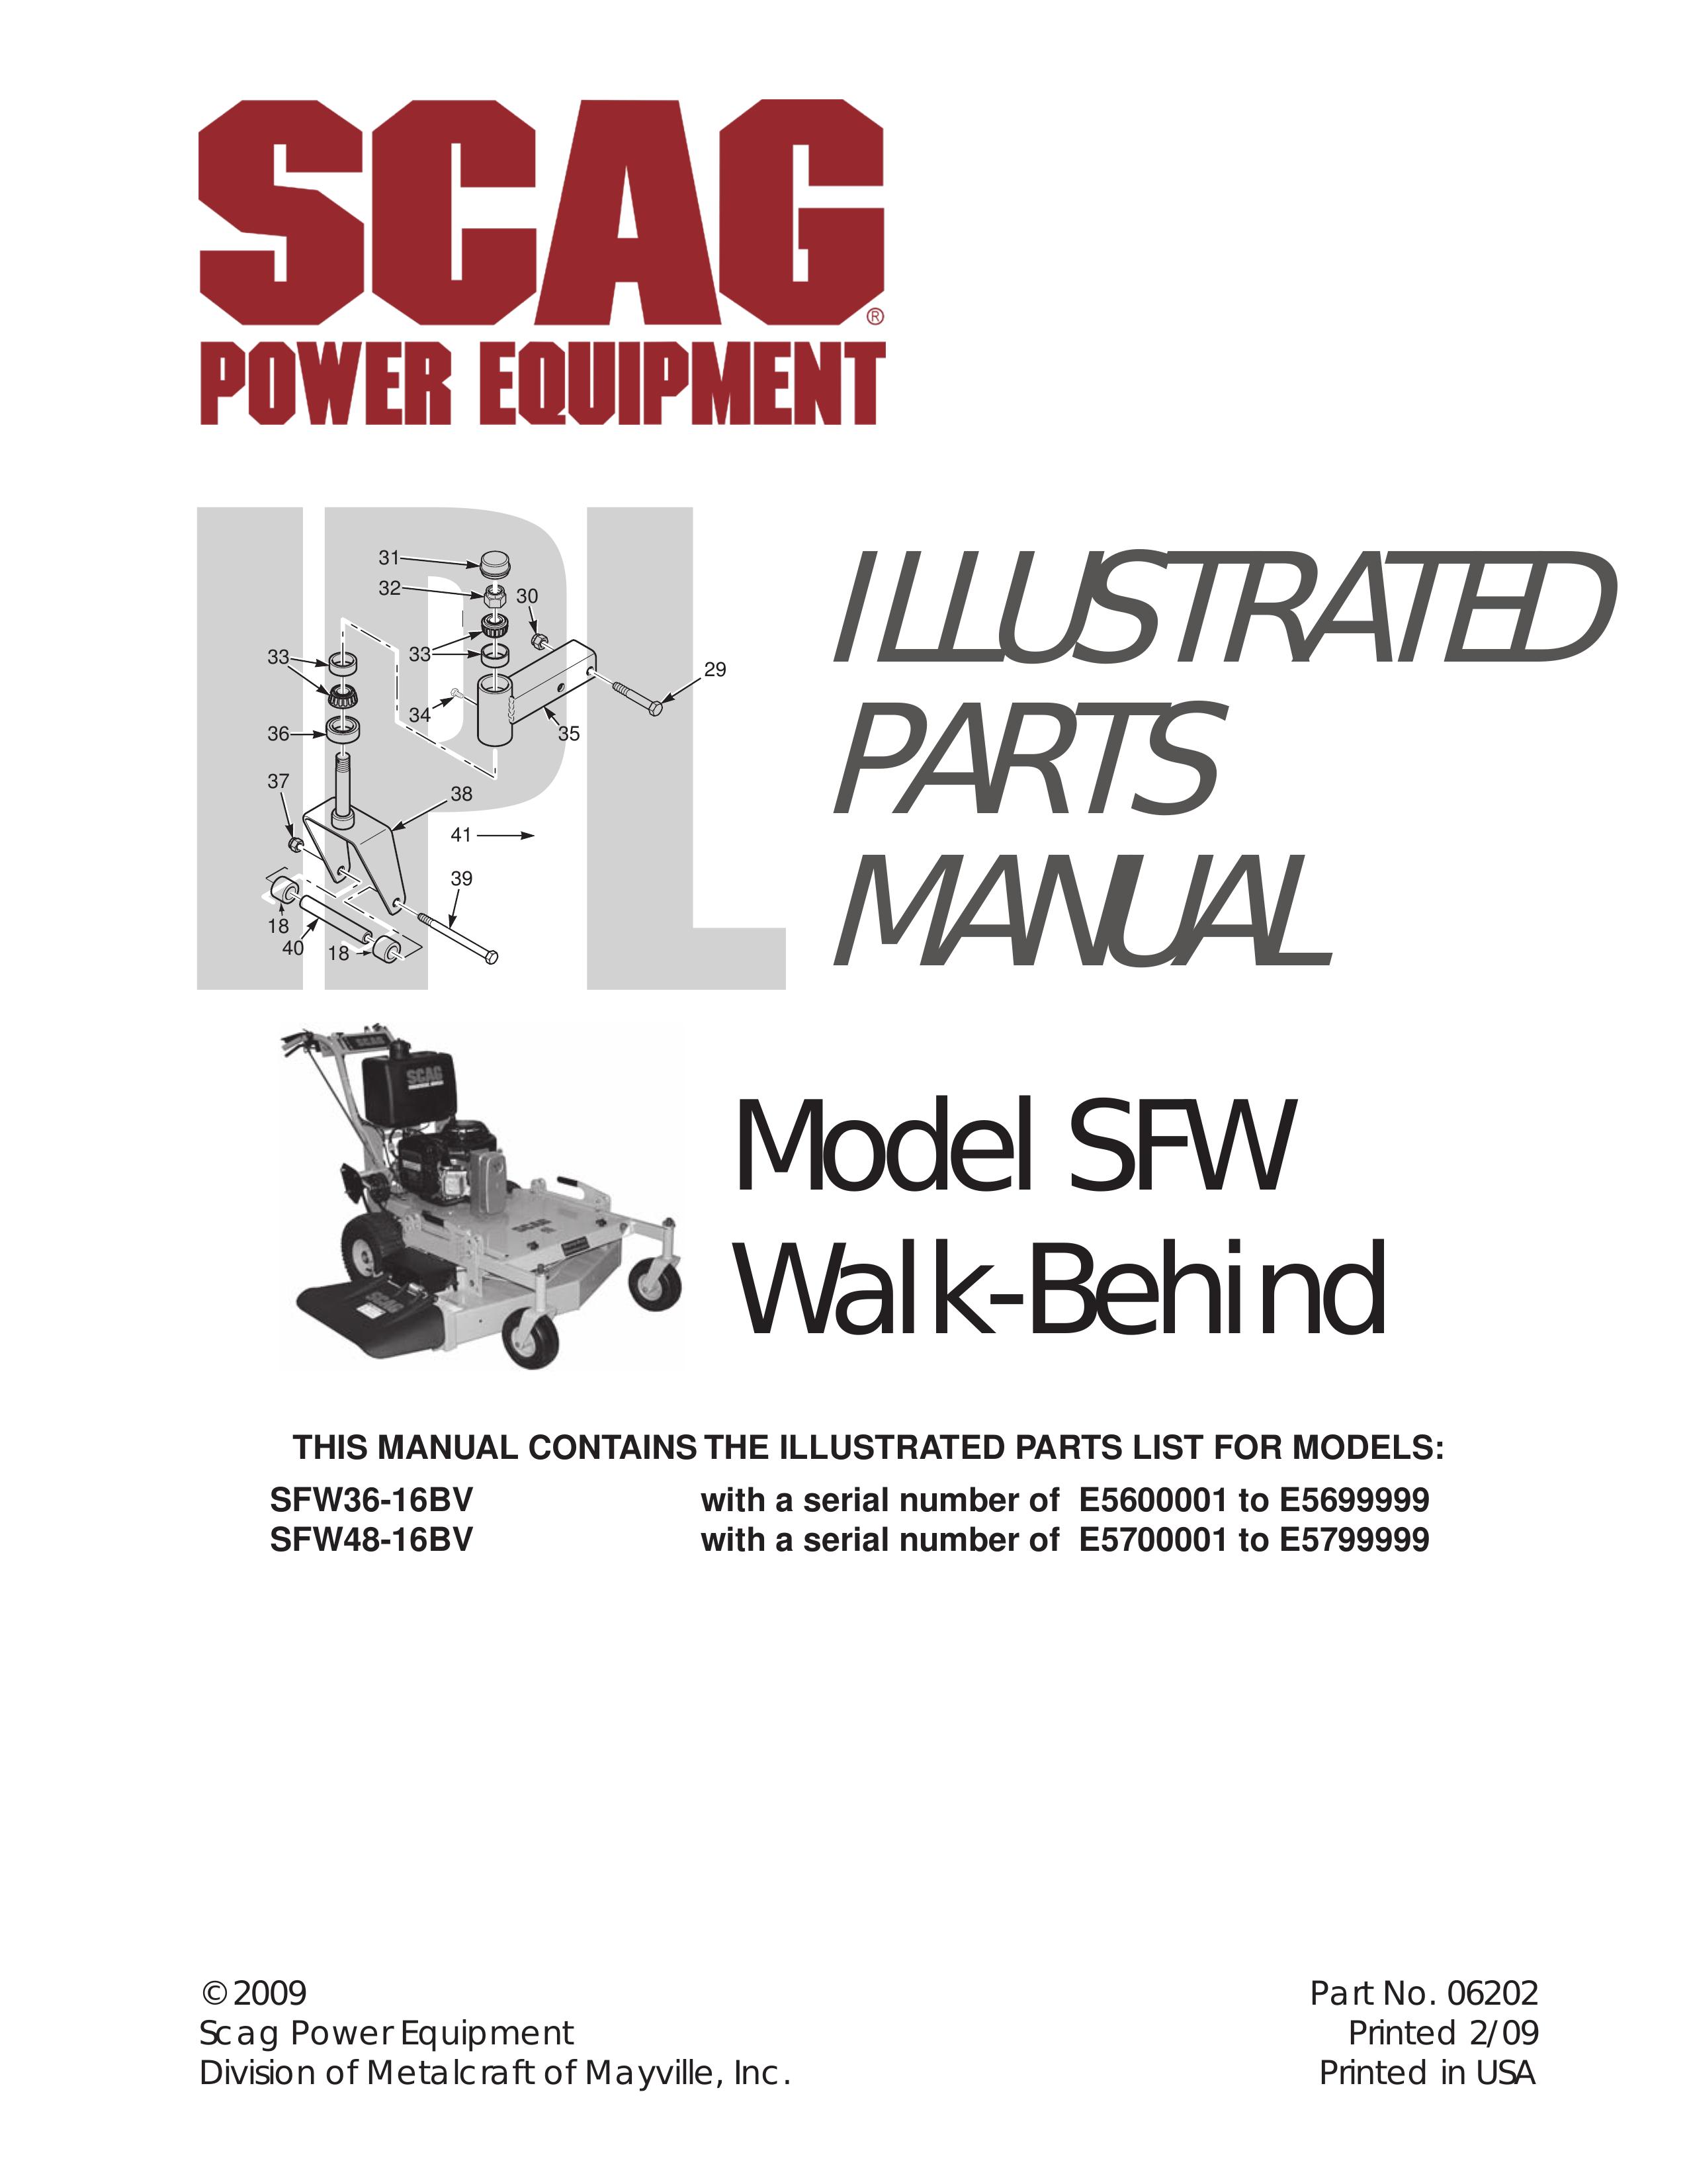 Scag Power Equipment SFW48-16BV Portable Generator User Manual